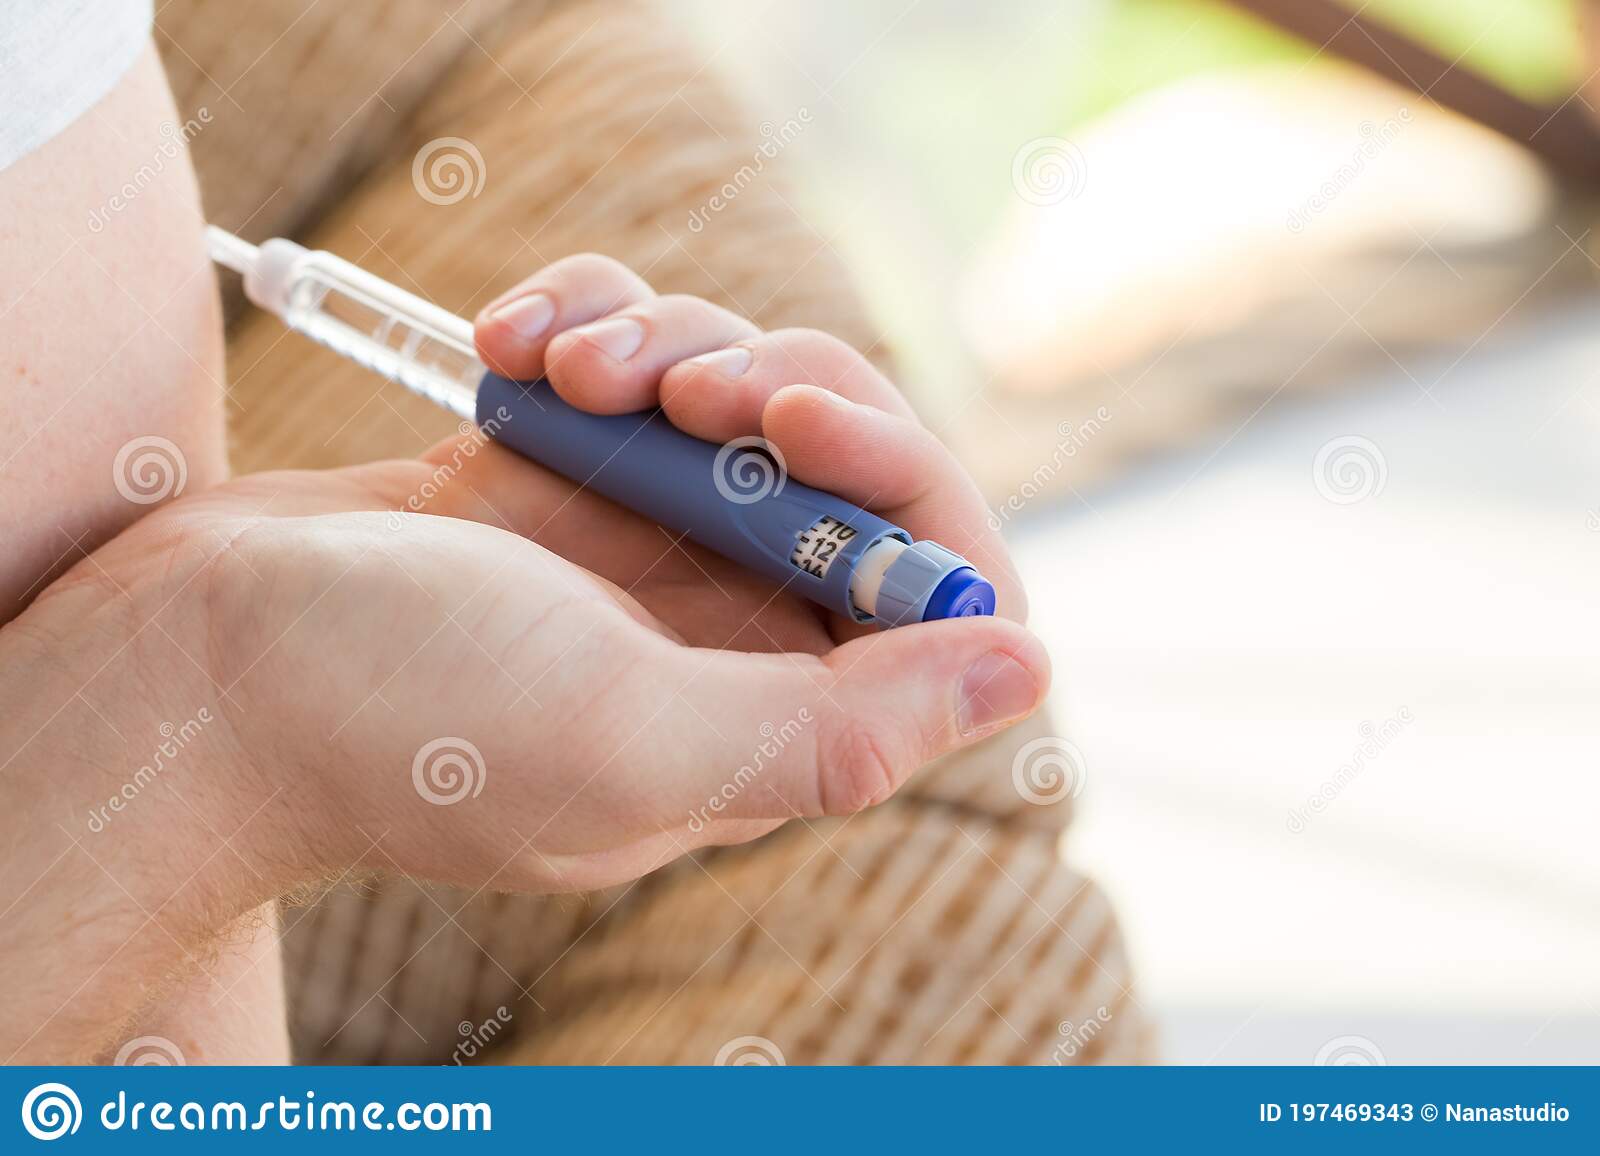 A Diabetic Patient Using Insulin Pen For Making An Insulin ...